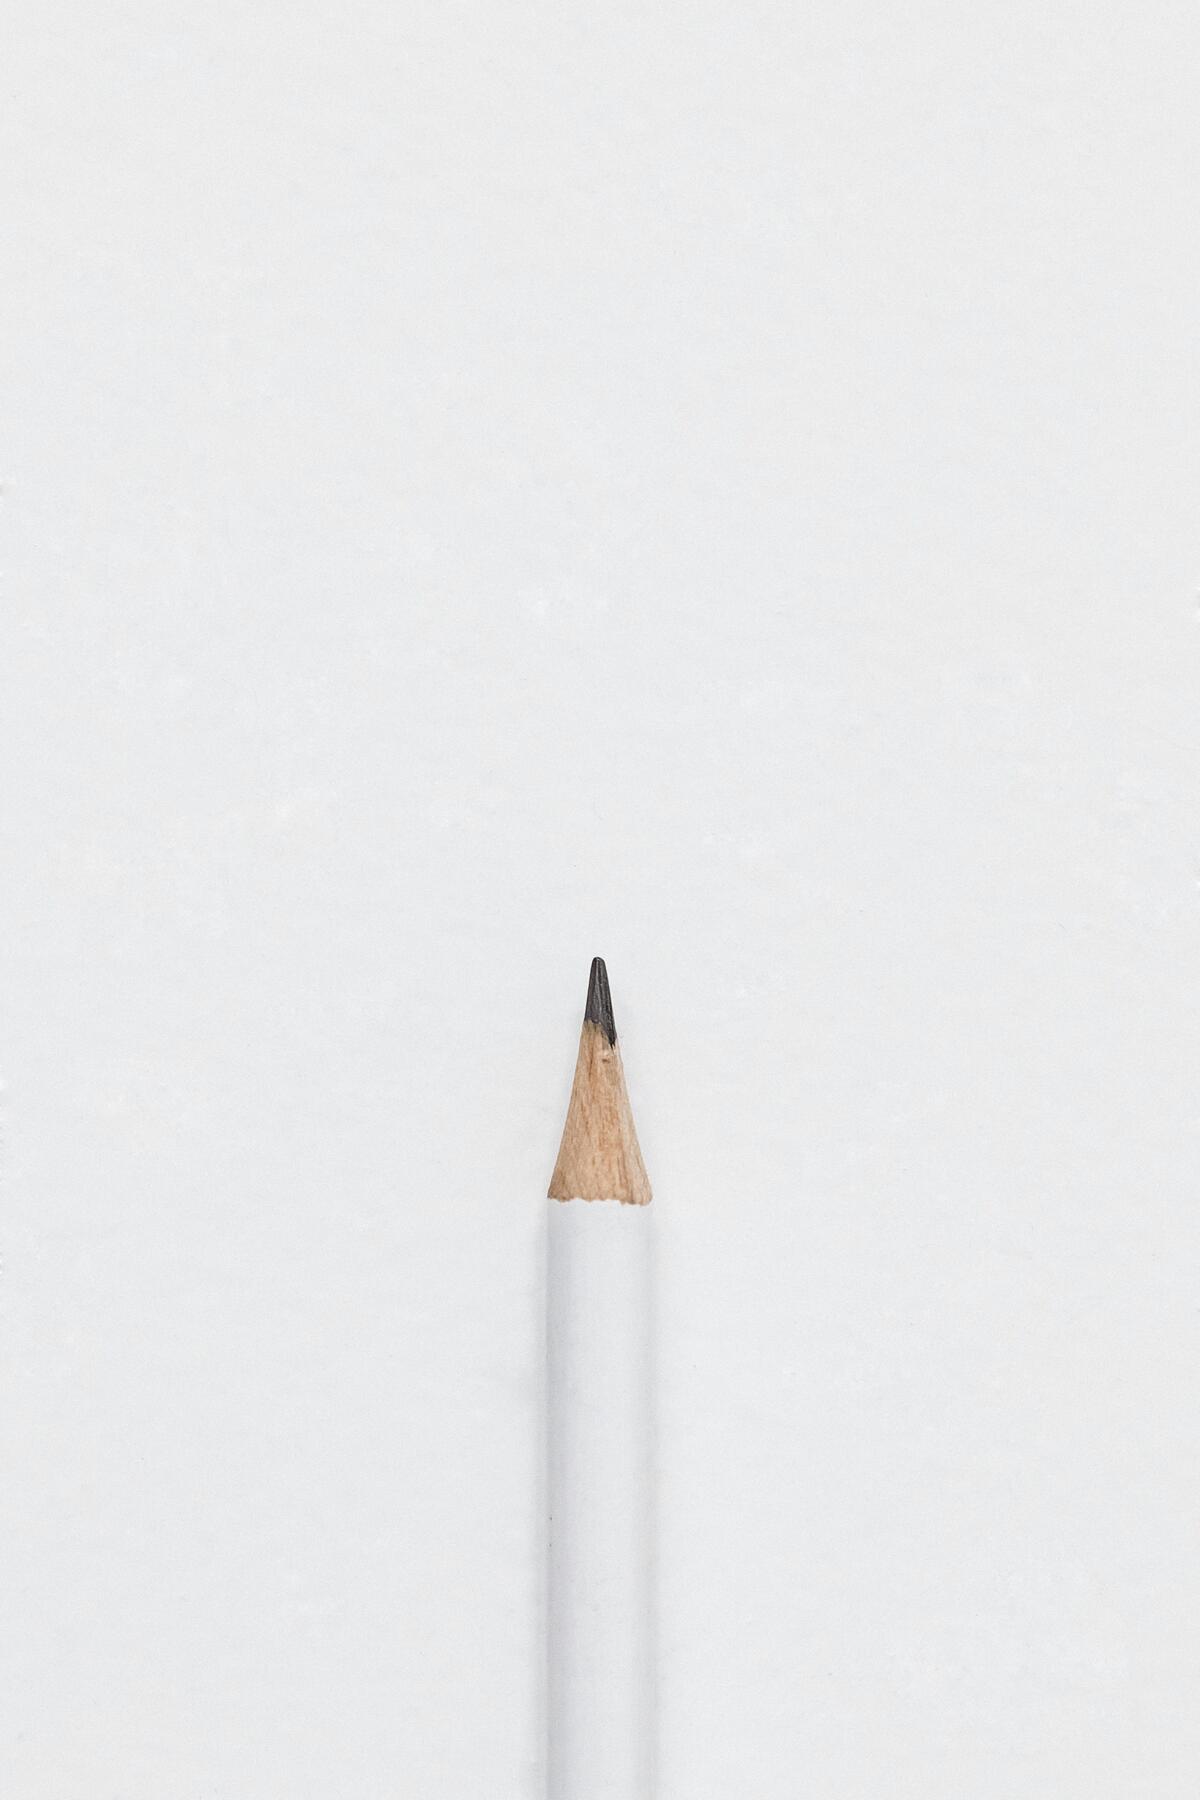 A simple pencil